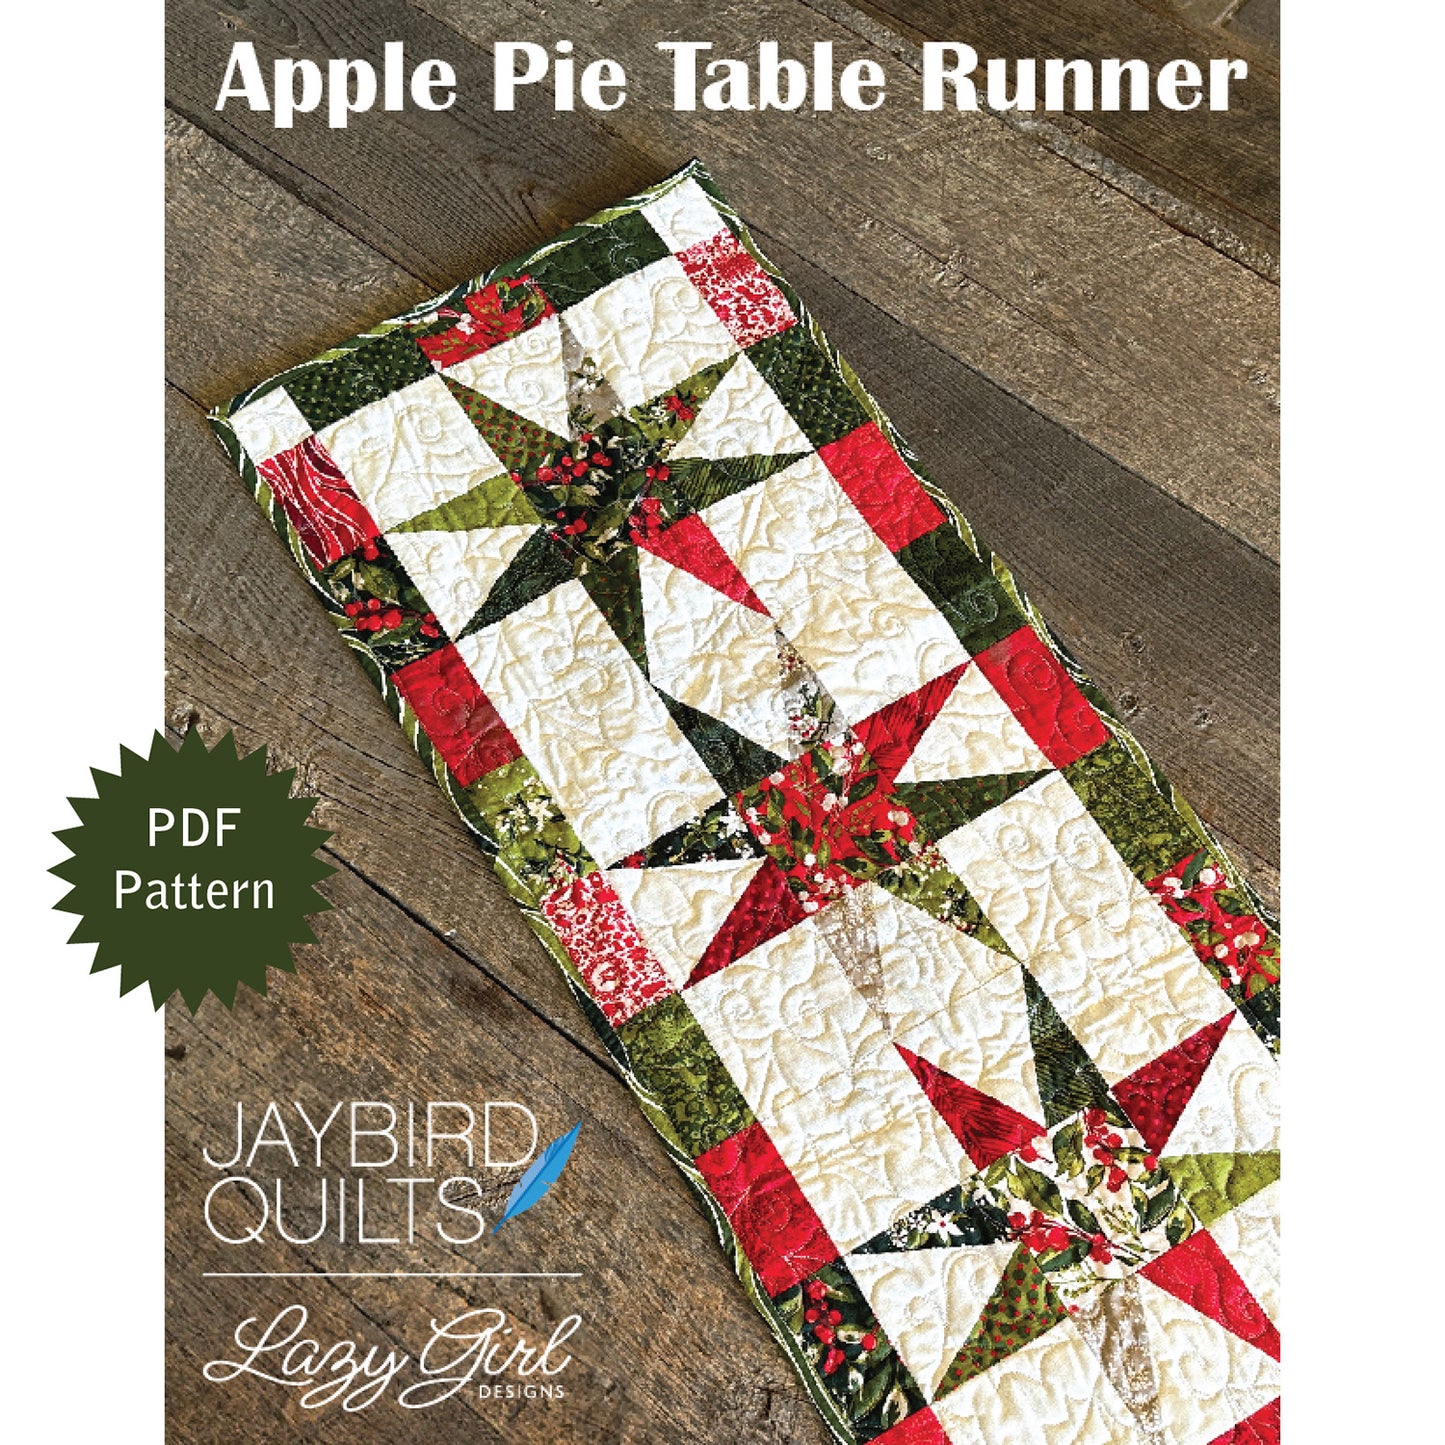 Apple Pie Table Runner PDF Pattern